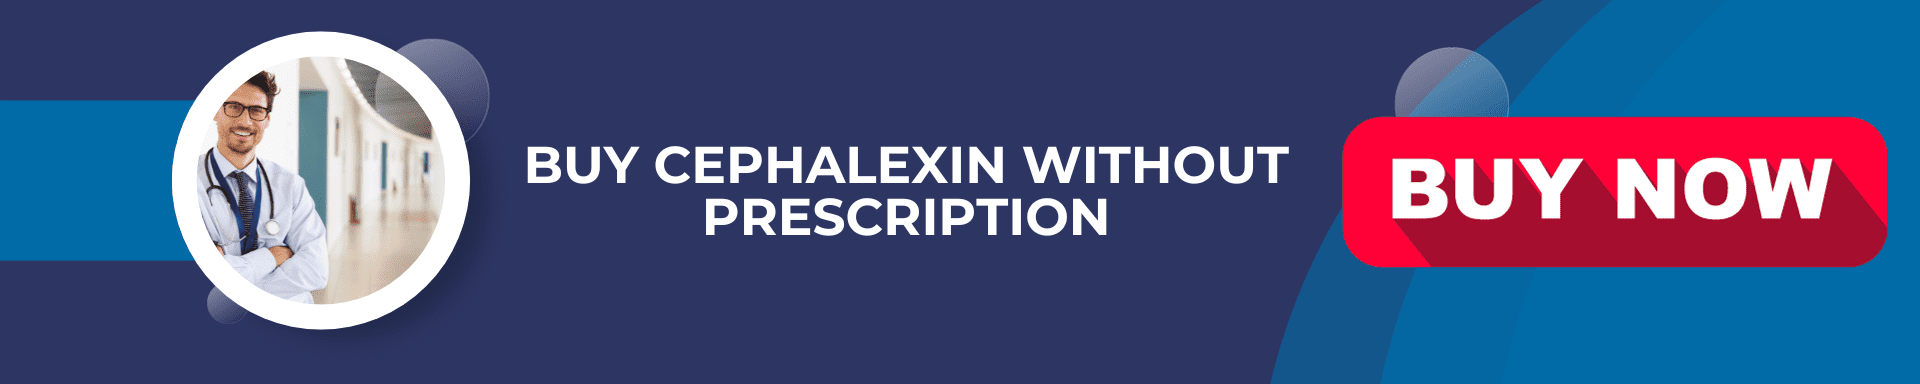 Cephalexin kaufen ohne rezept